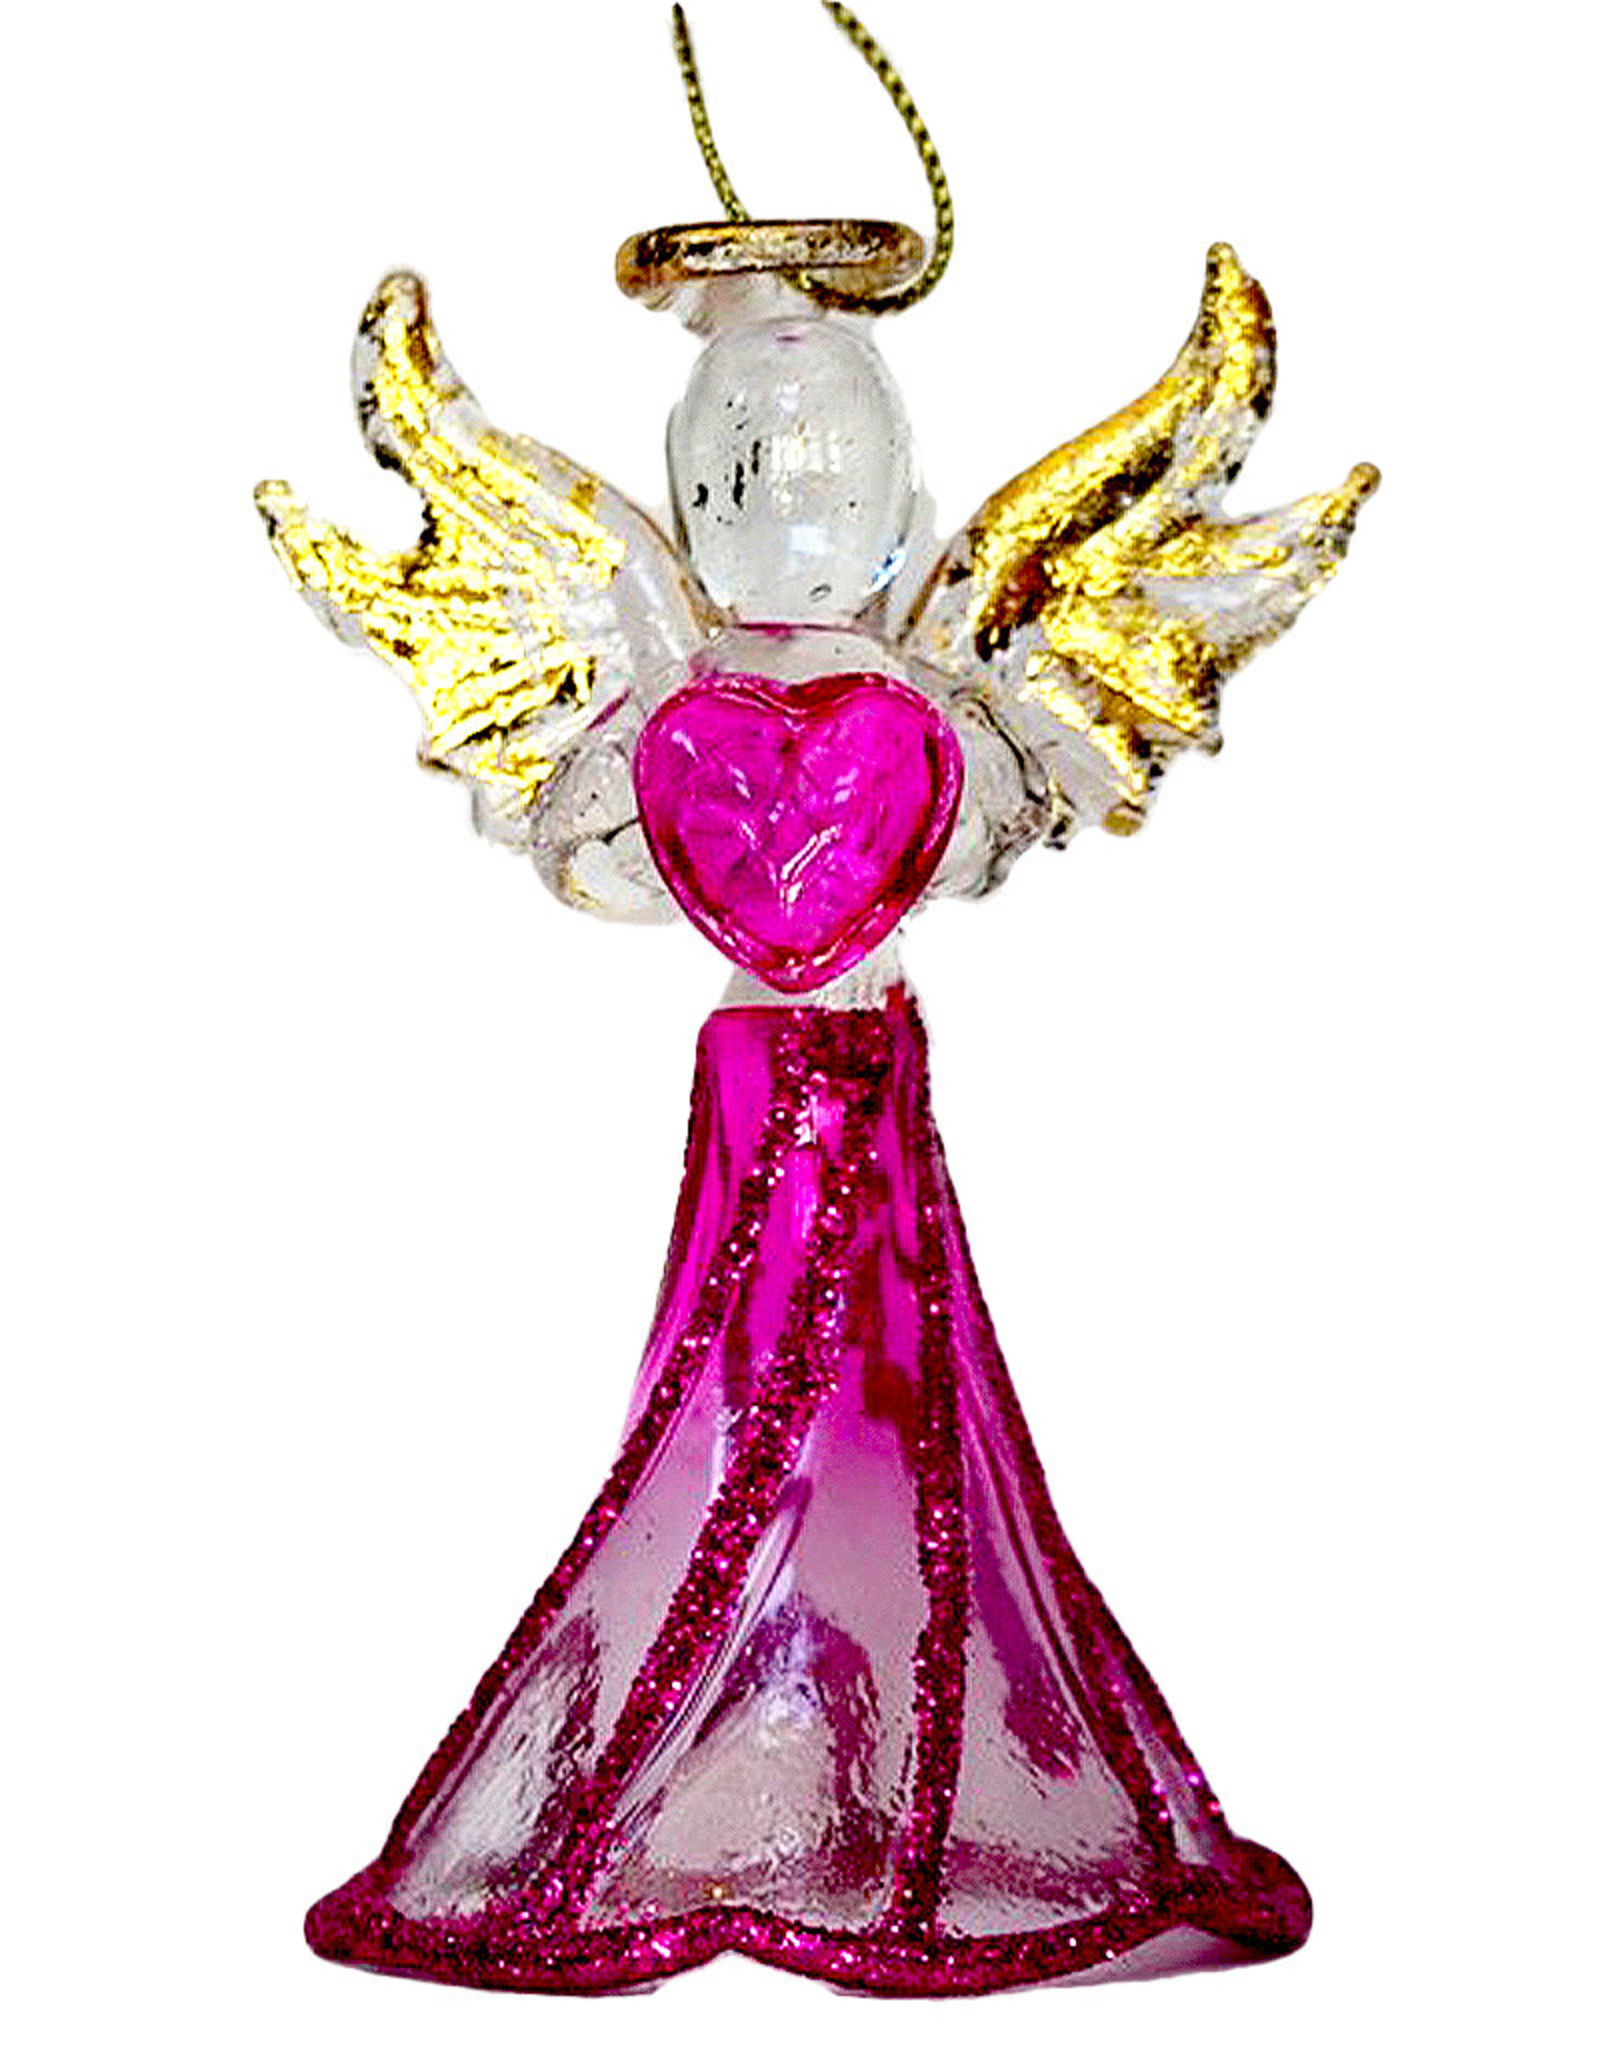 Kurt Adler Crystal Birthstone Angel Ornaments JUNE